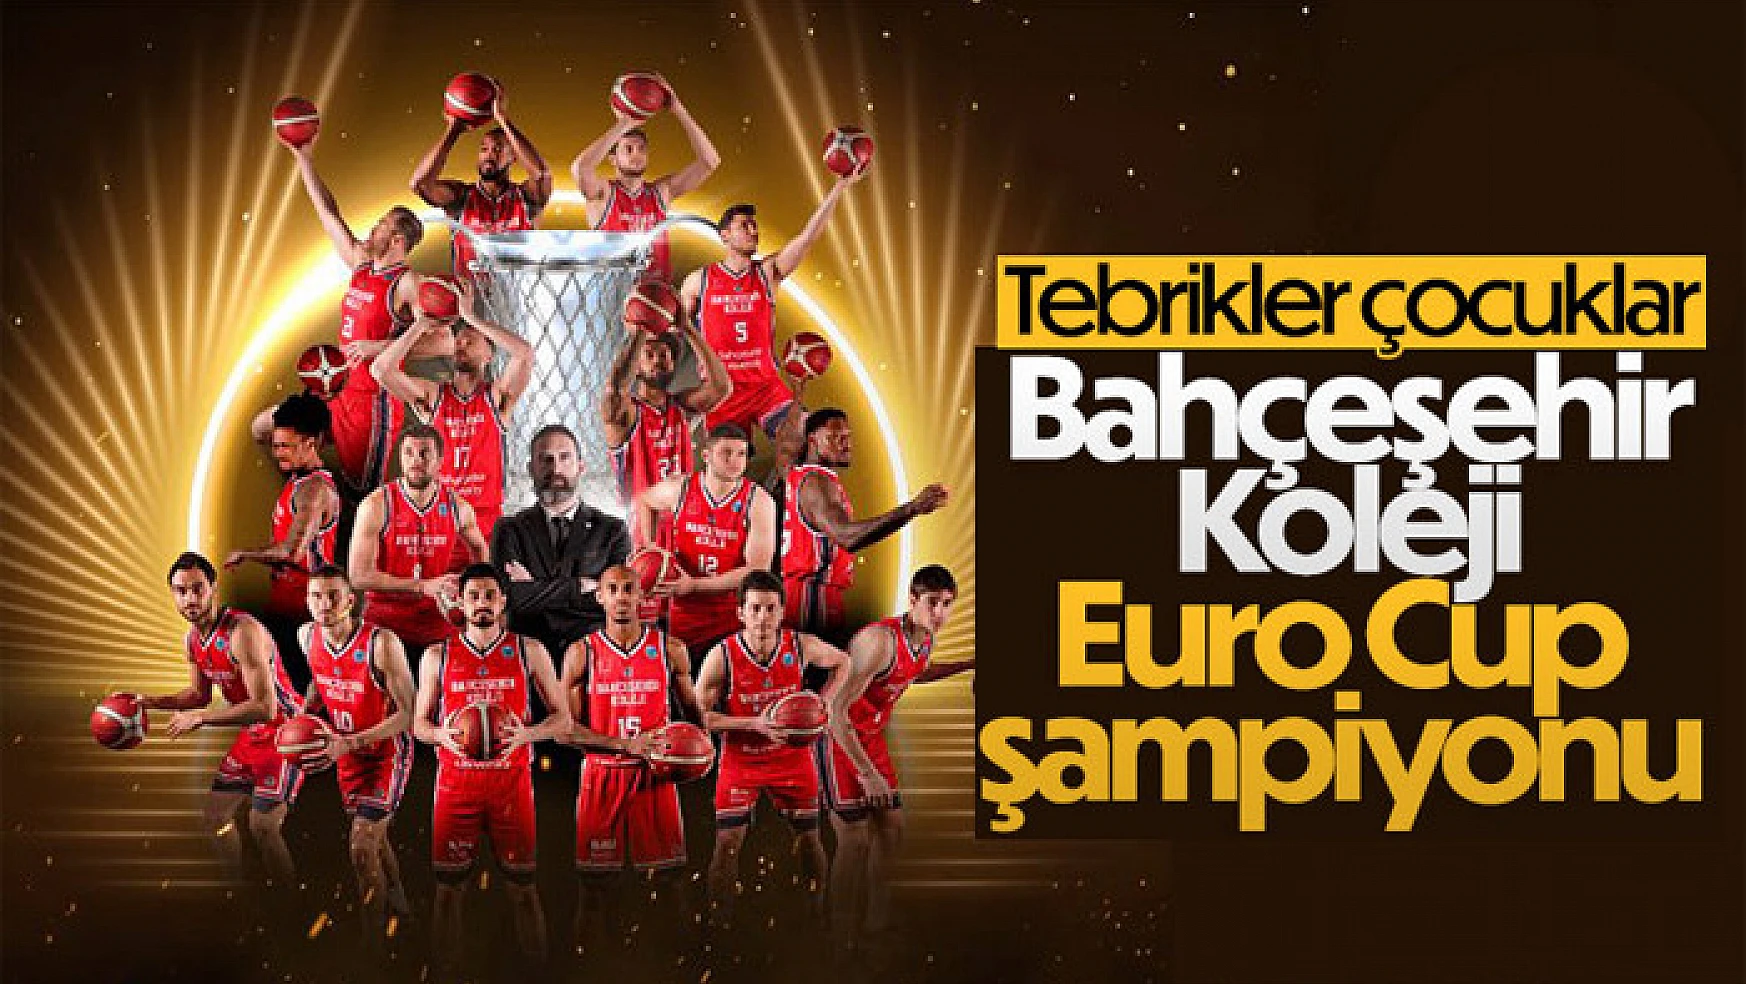 Bahçeşehir Koleji Europe Cup şampiyonu